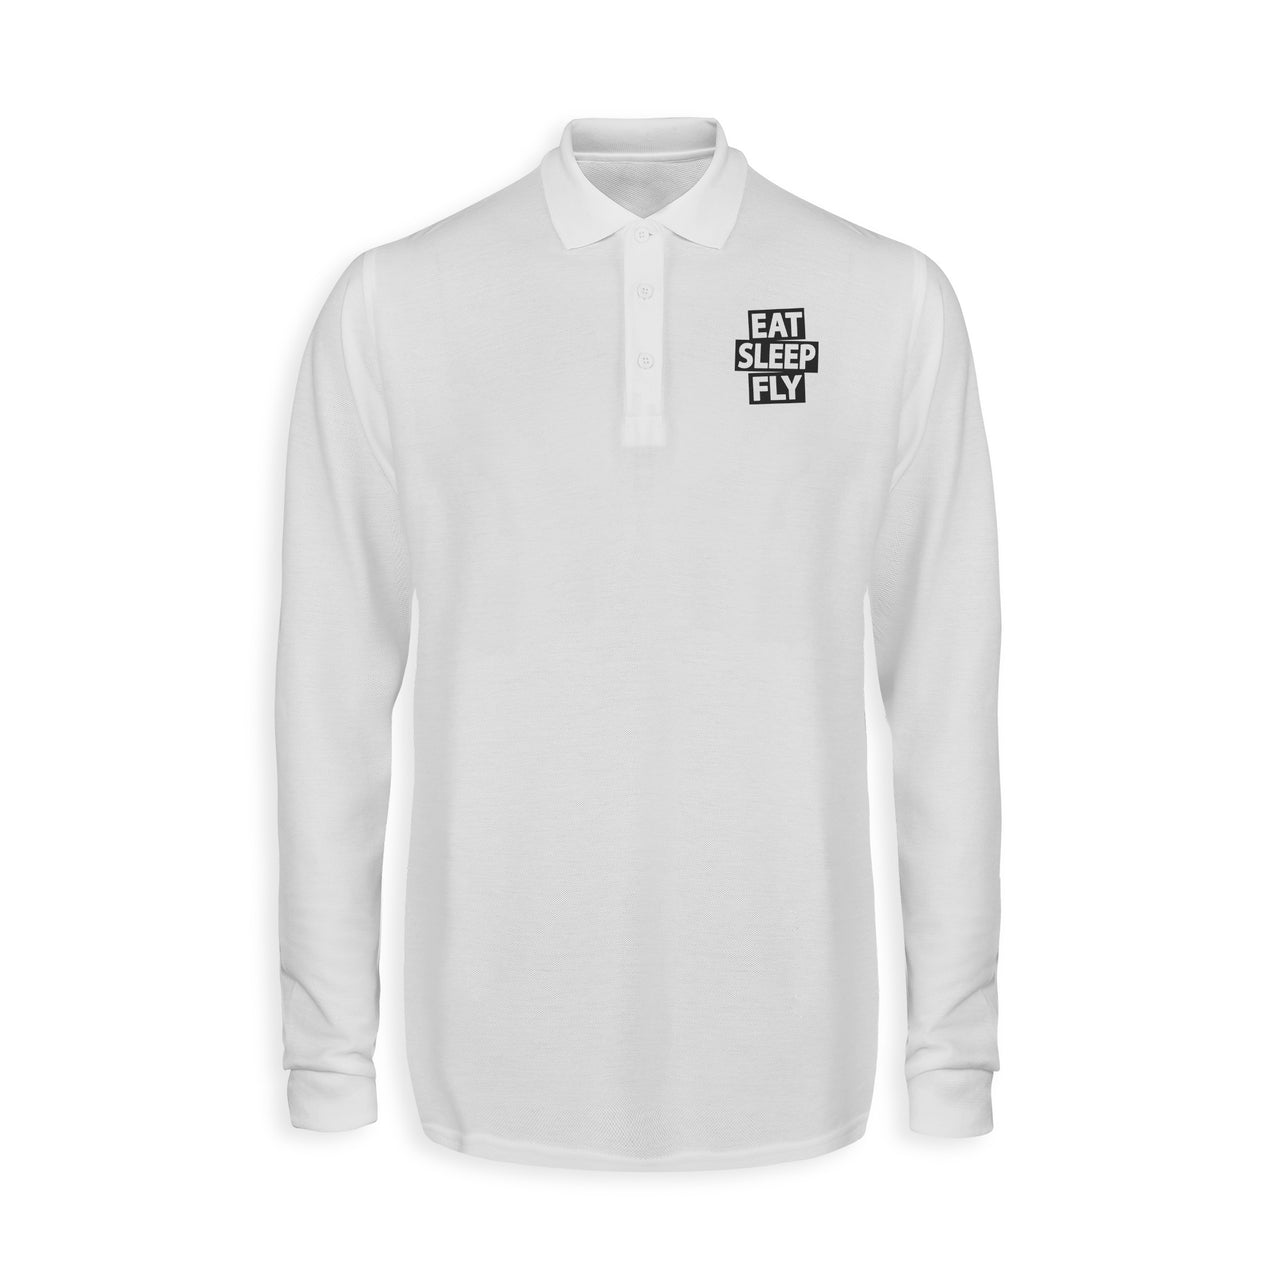 Eat Sleep Fly Designed Long Sleeve Polo T-Shirts